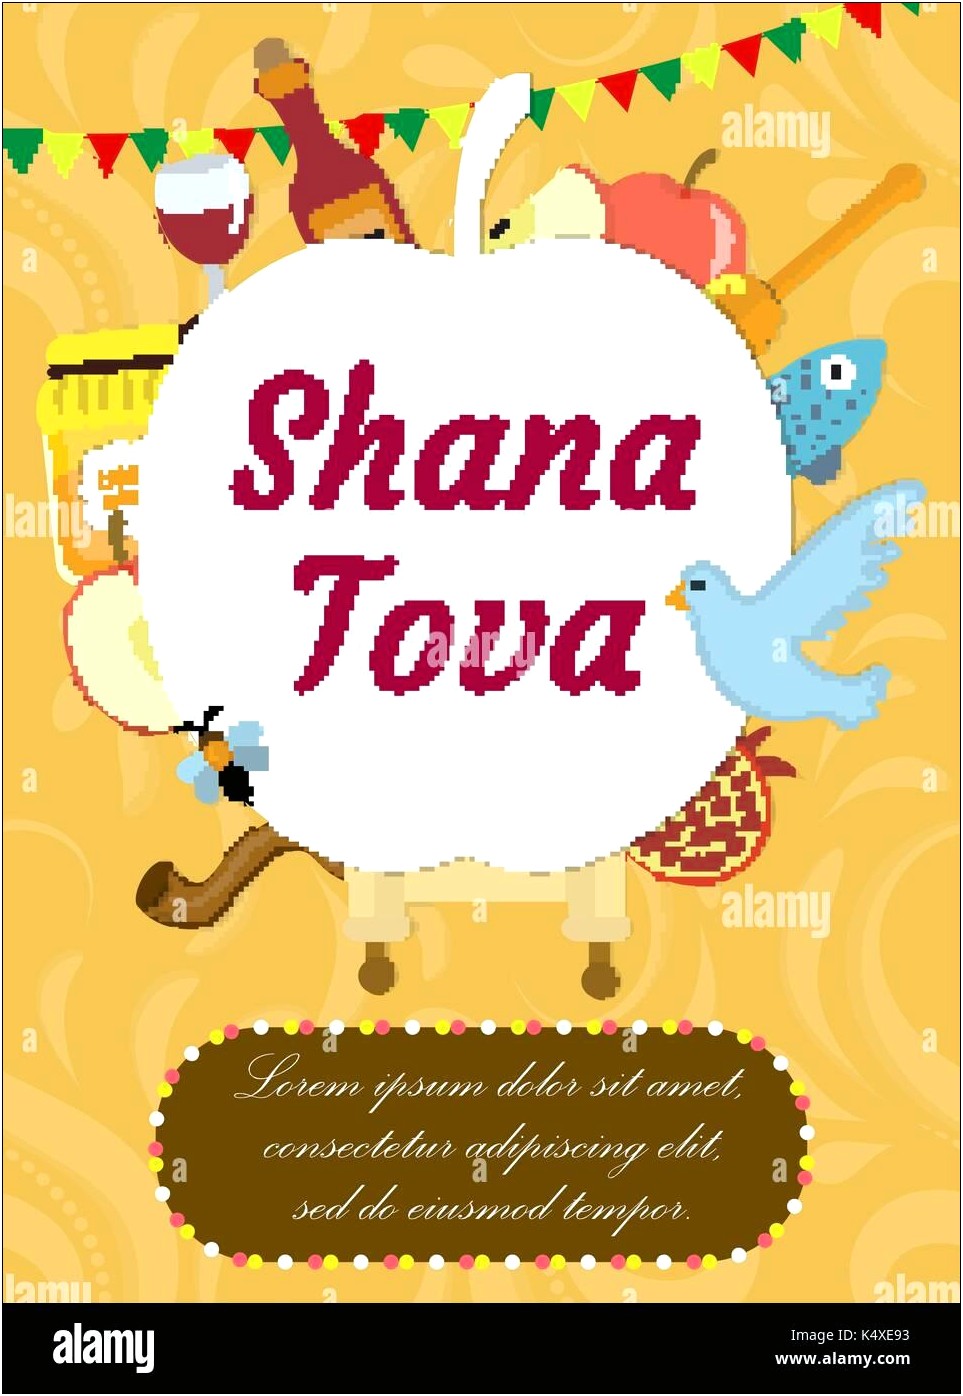 Free Jewish Templates For Rosh Hashana